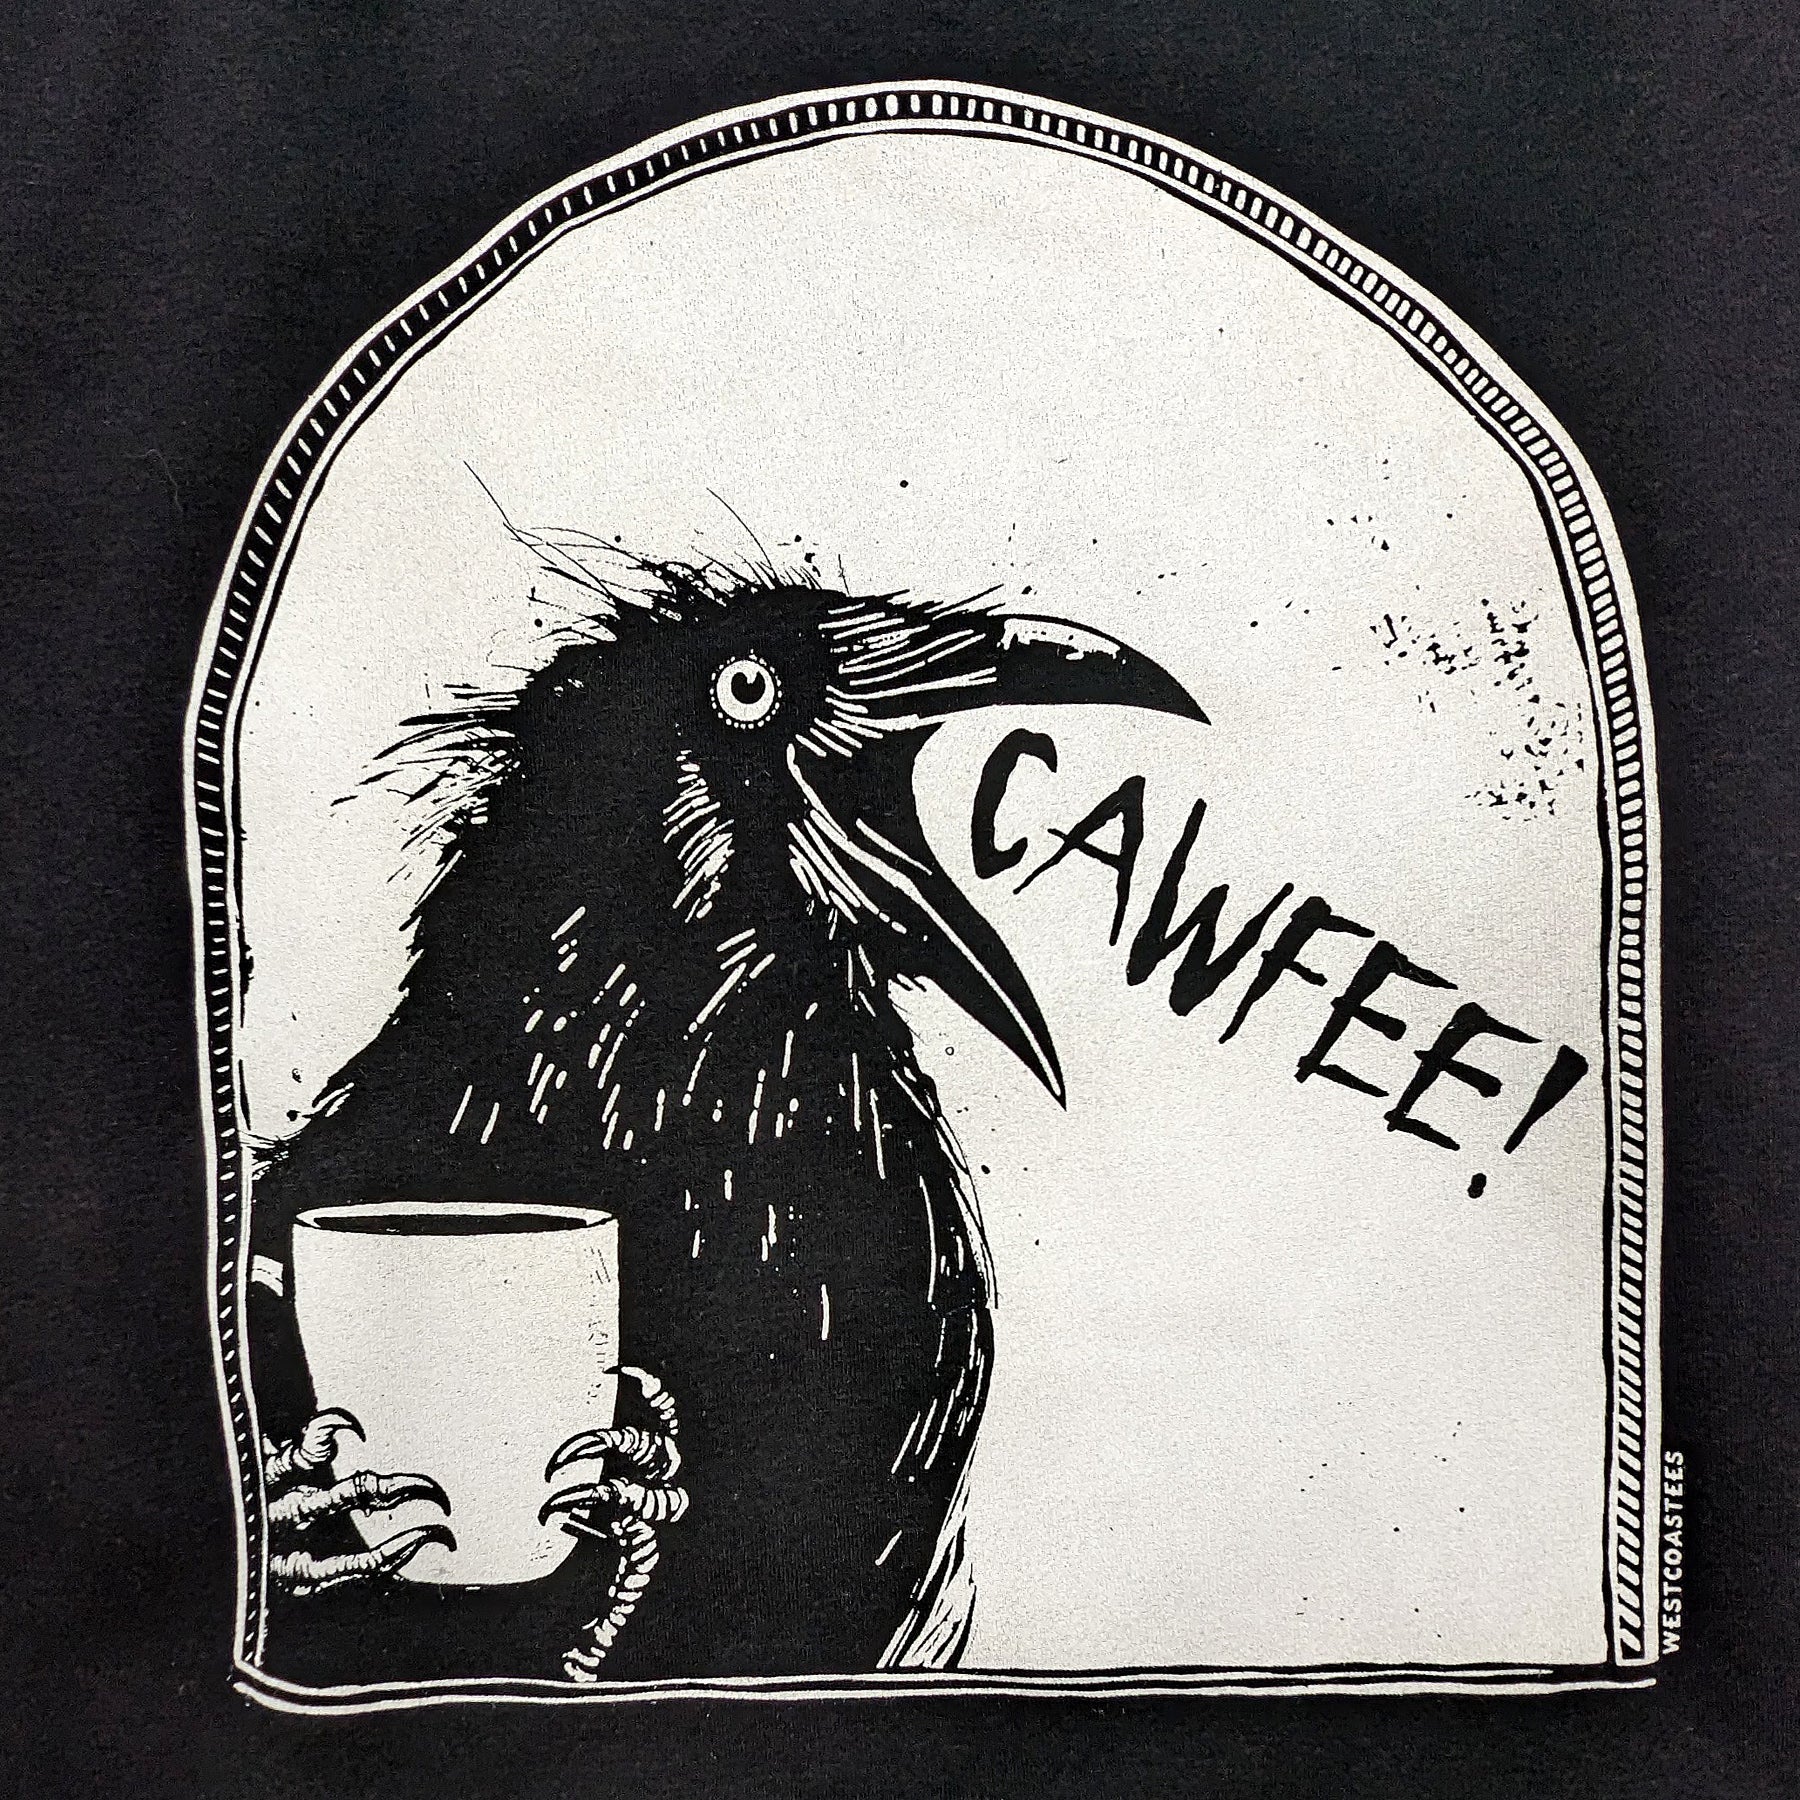 Adult Unisex Cawfee! T-shirt